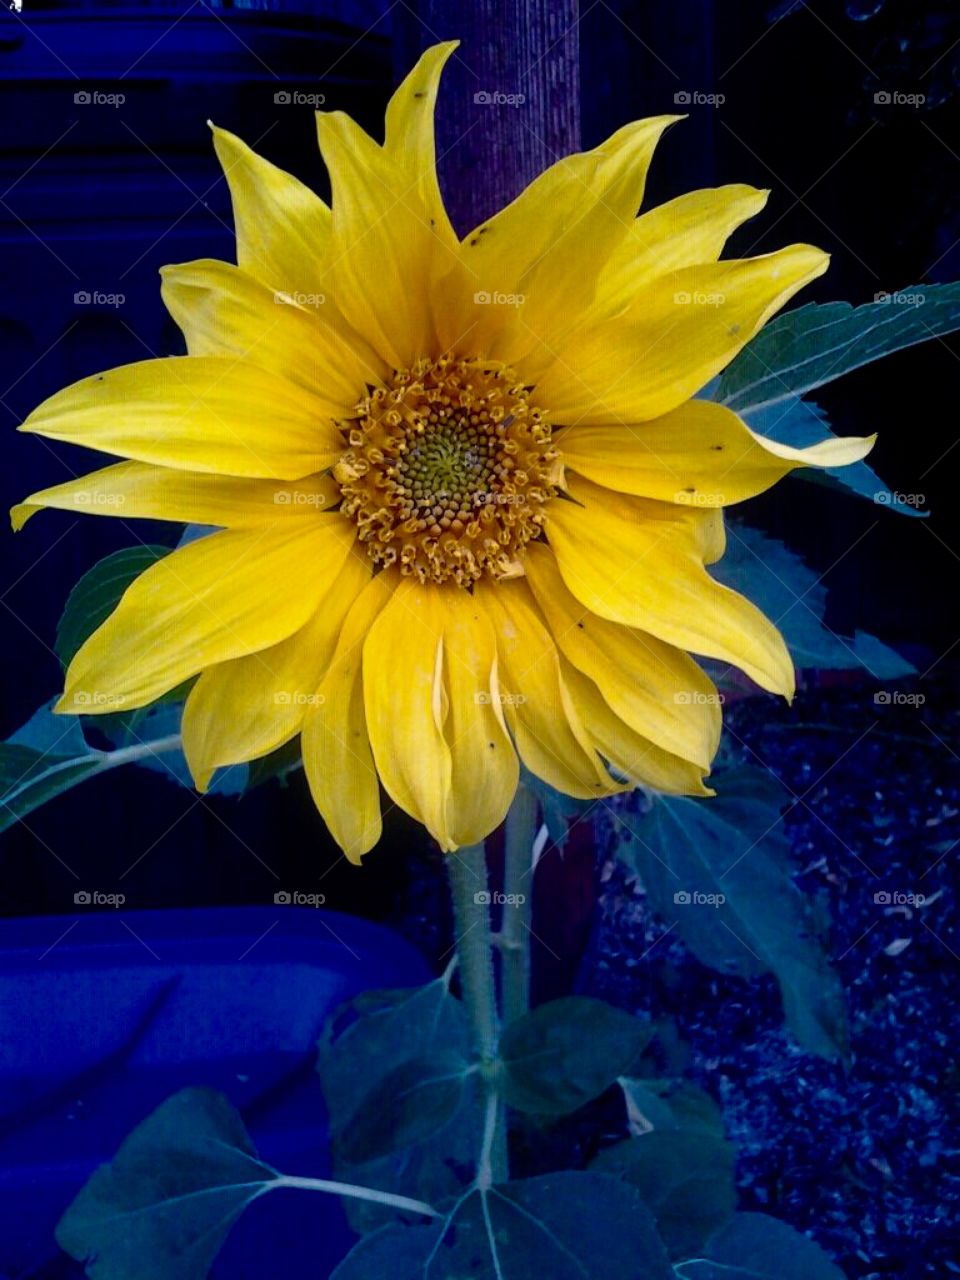 Gorgeous Giant Sunflower 